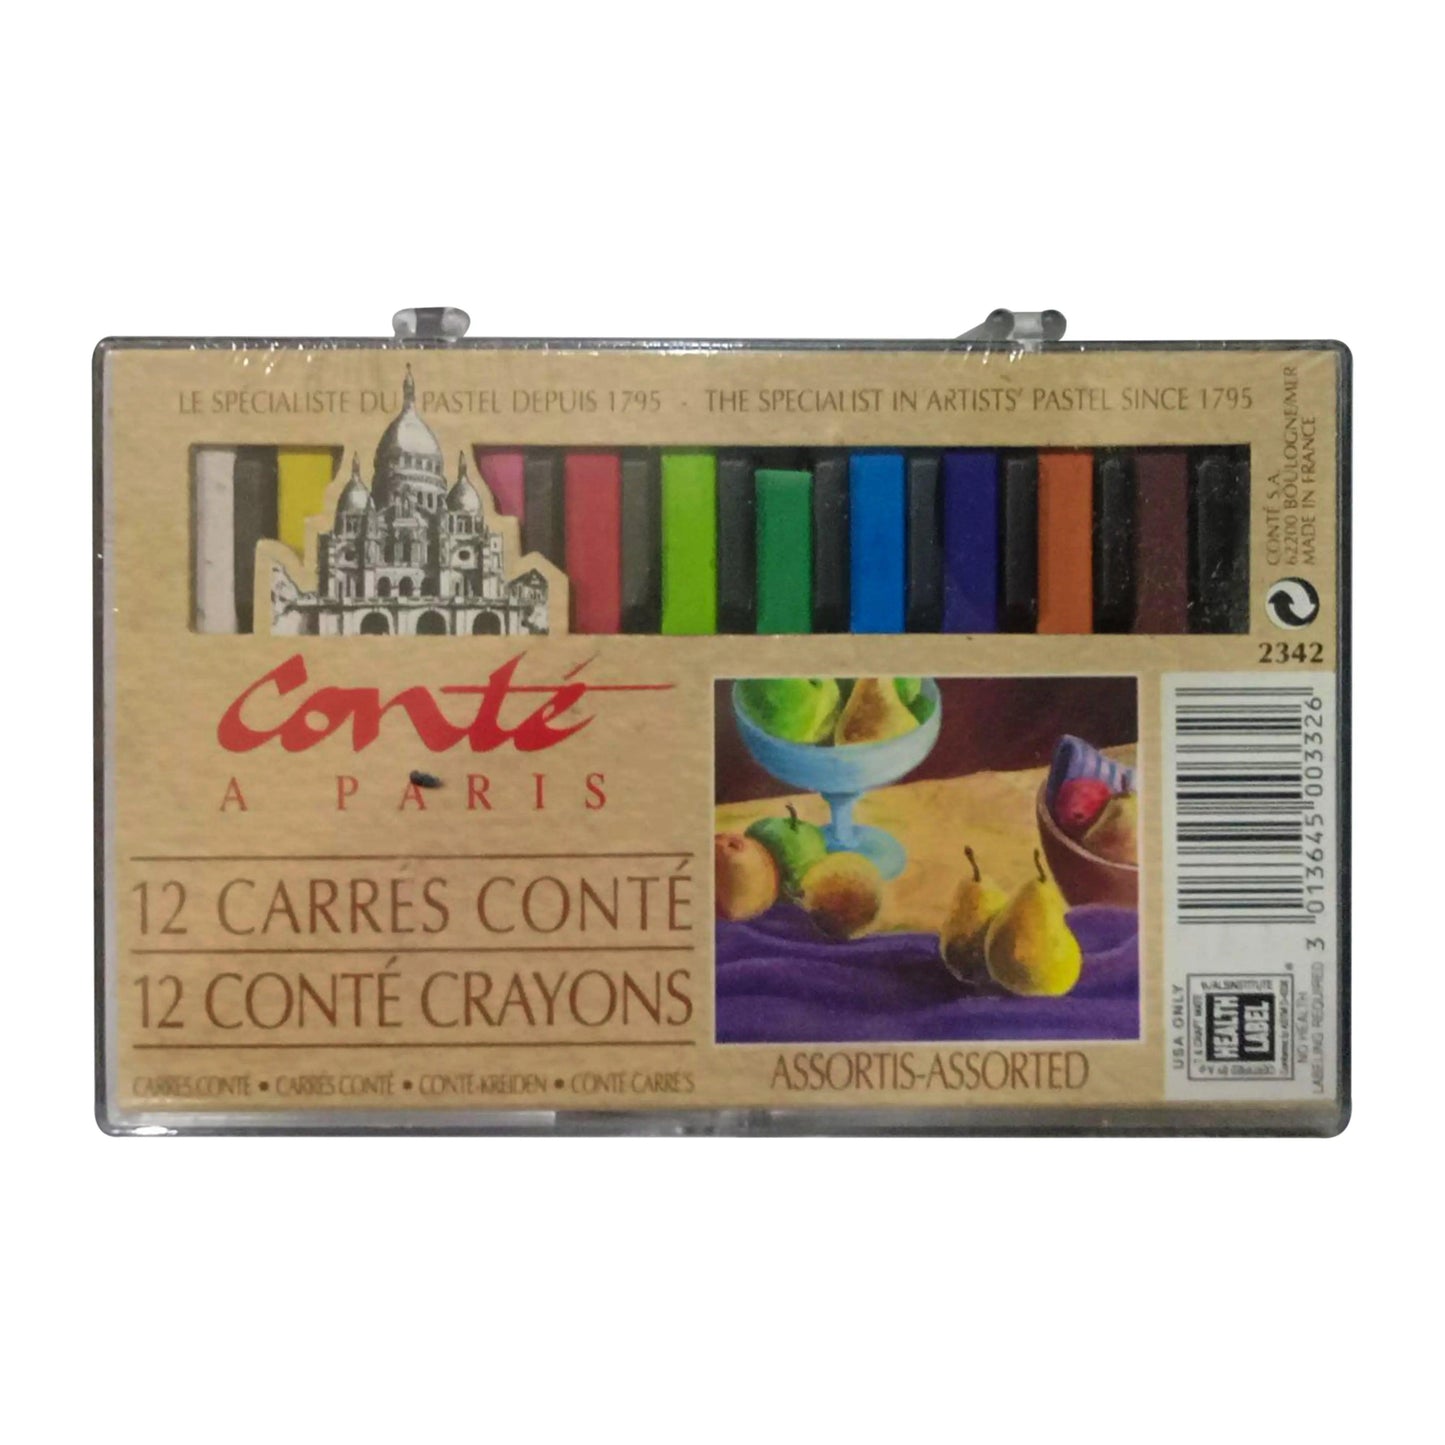 Conte A Paris Conte Crayons The Stationers